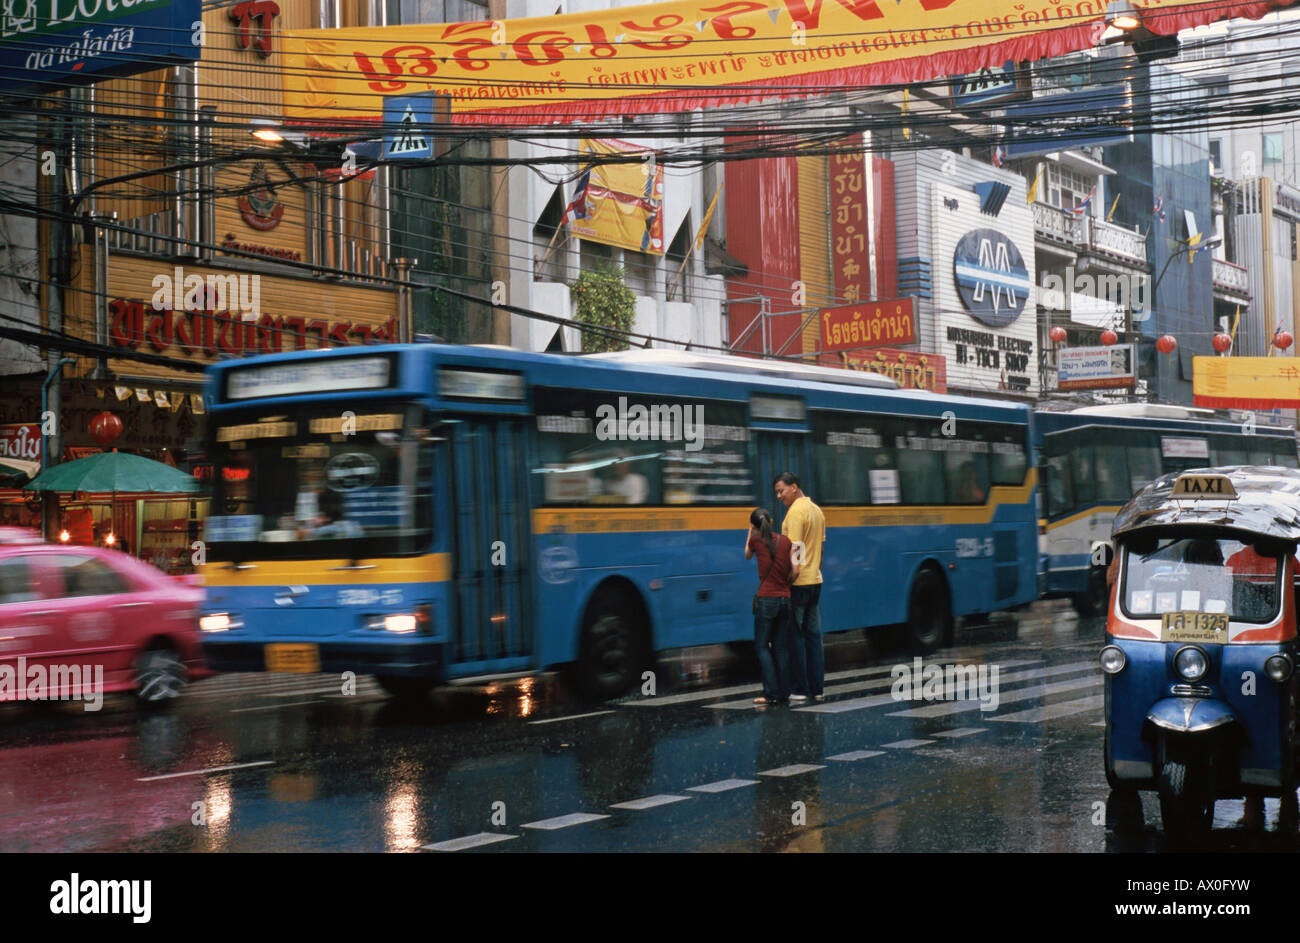 Monsoon rain, Chinatown, Bangkok, Thailand Stock Photo